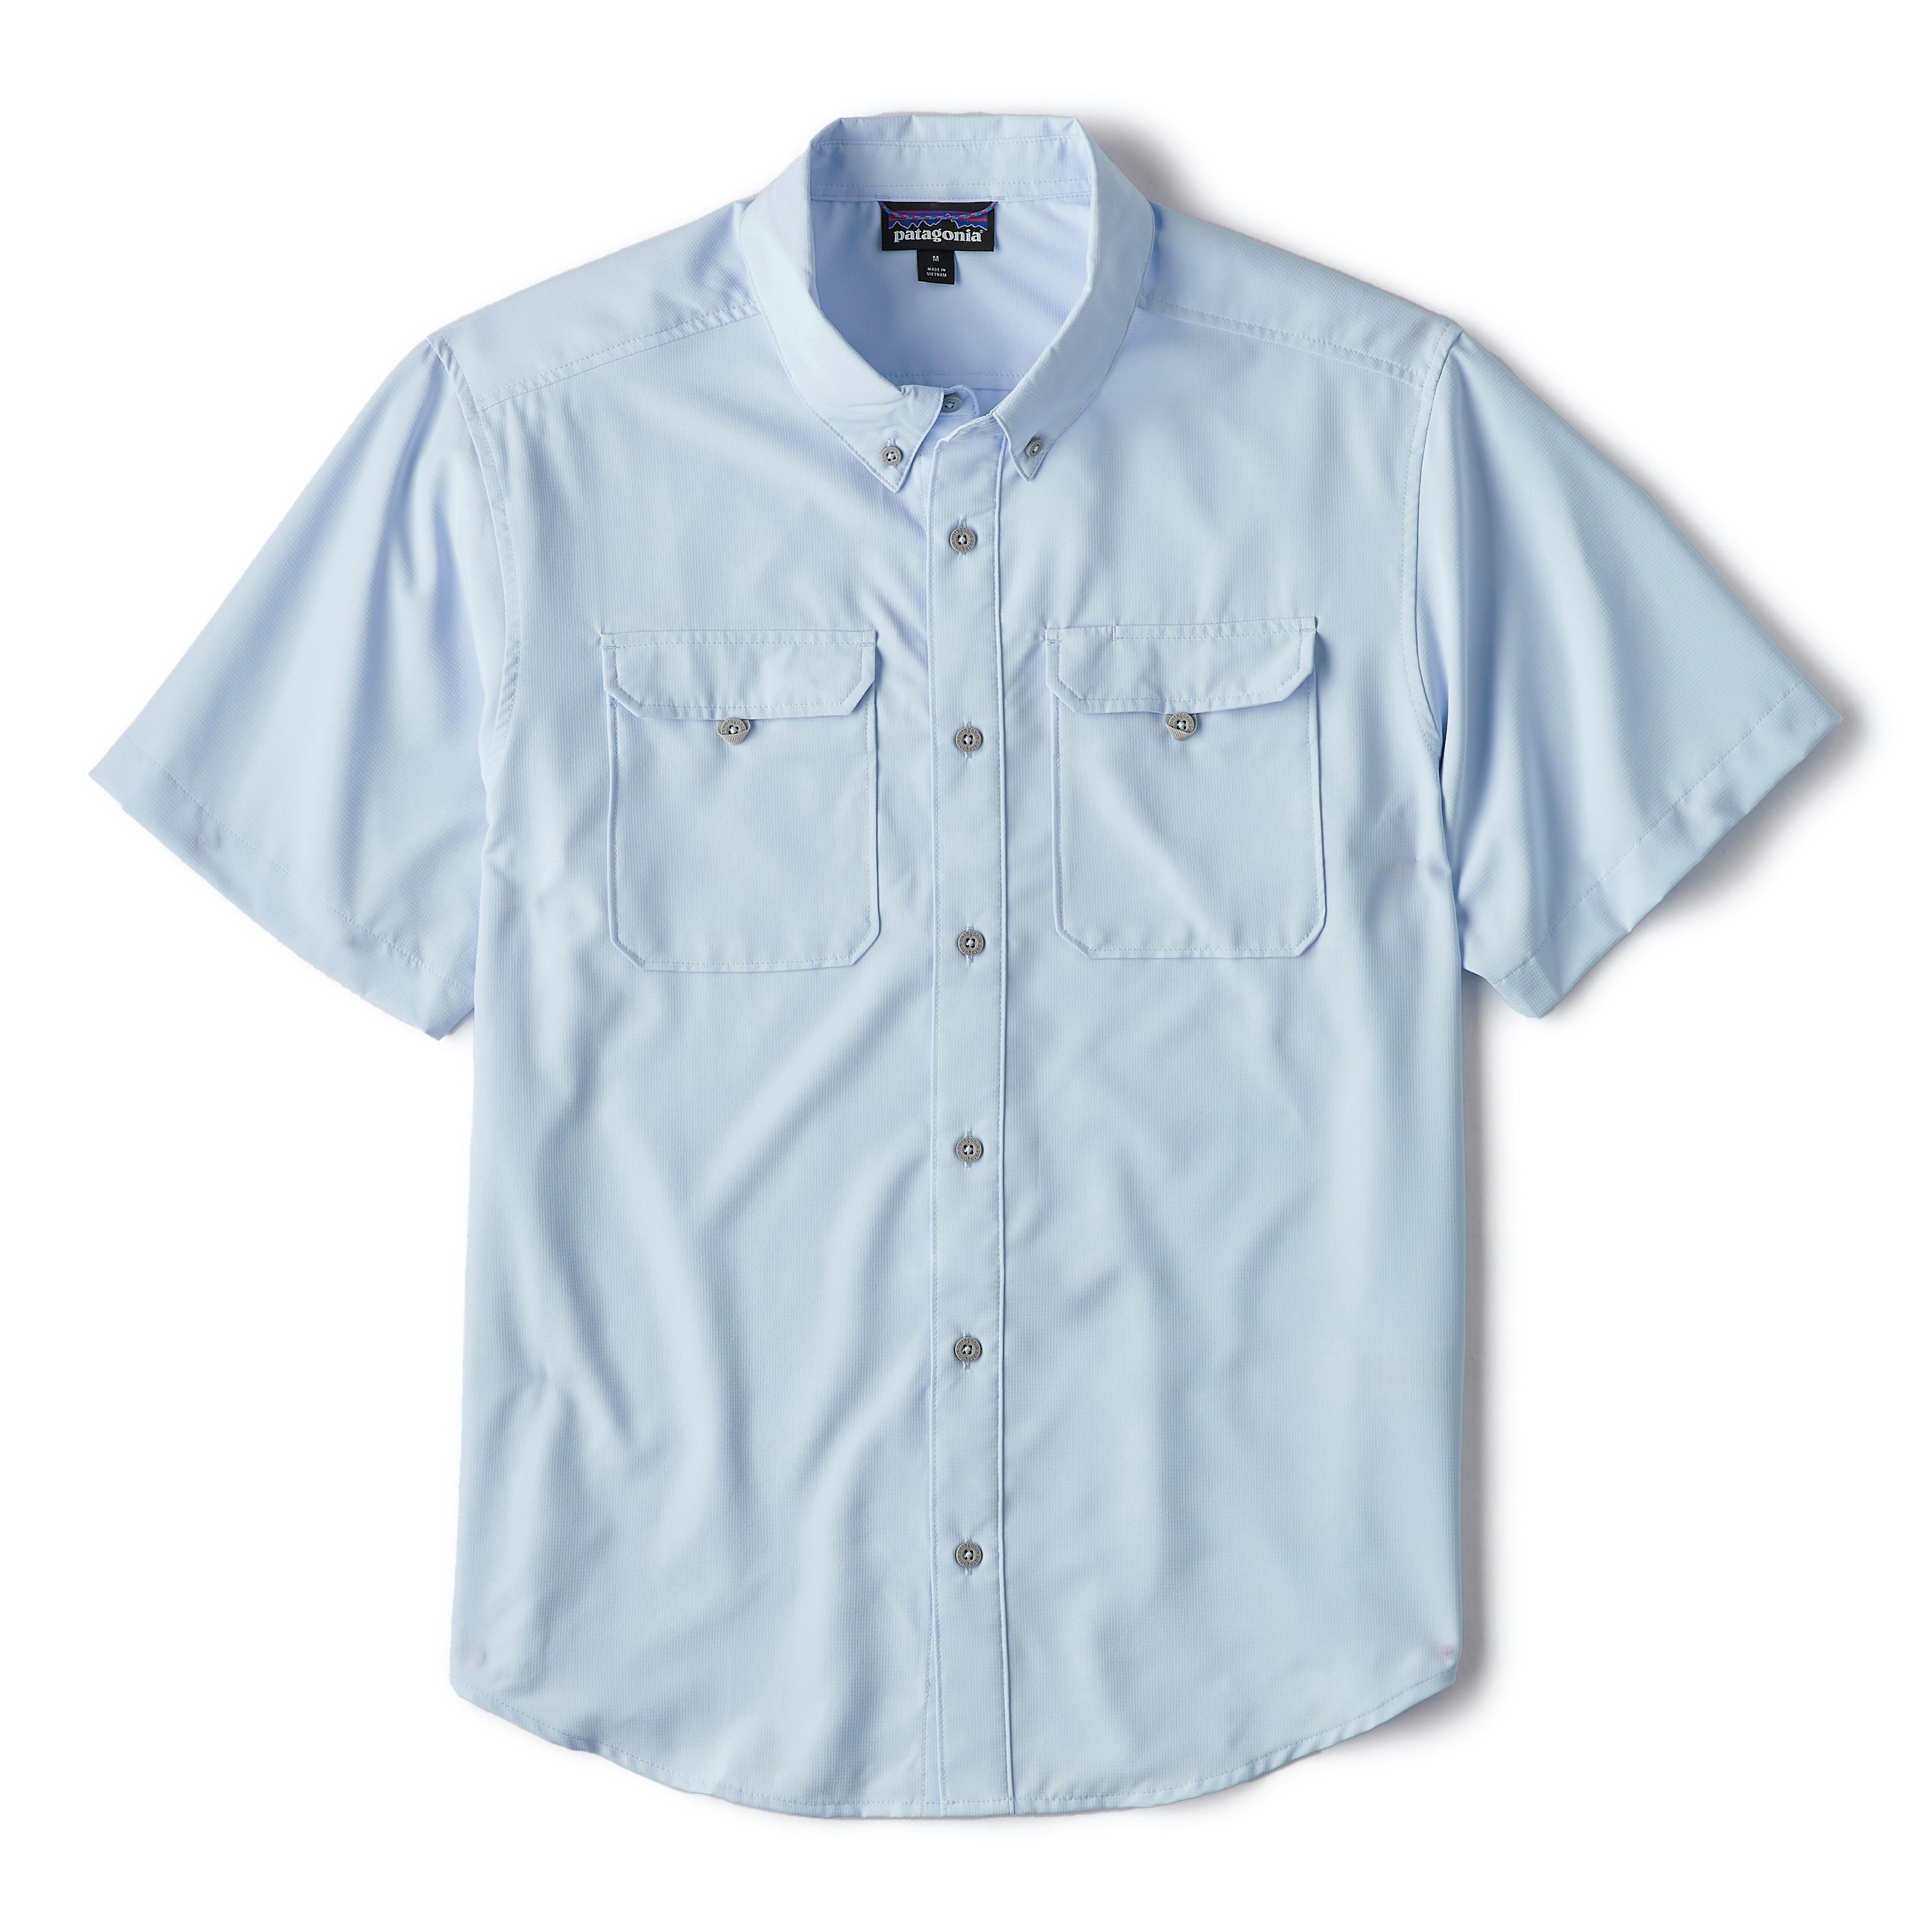 Patagonia Men's Sun Stretch Long-Sleeve Shirt - Chilled Blue XL